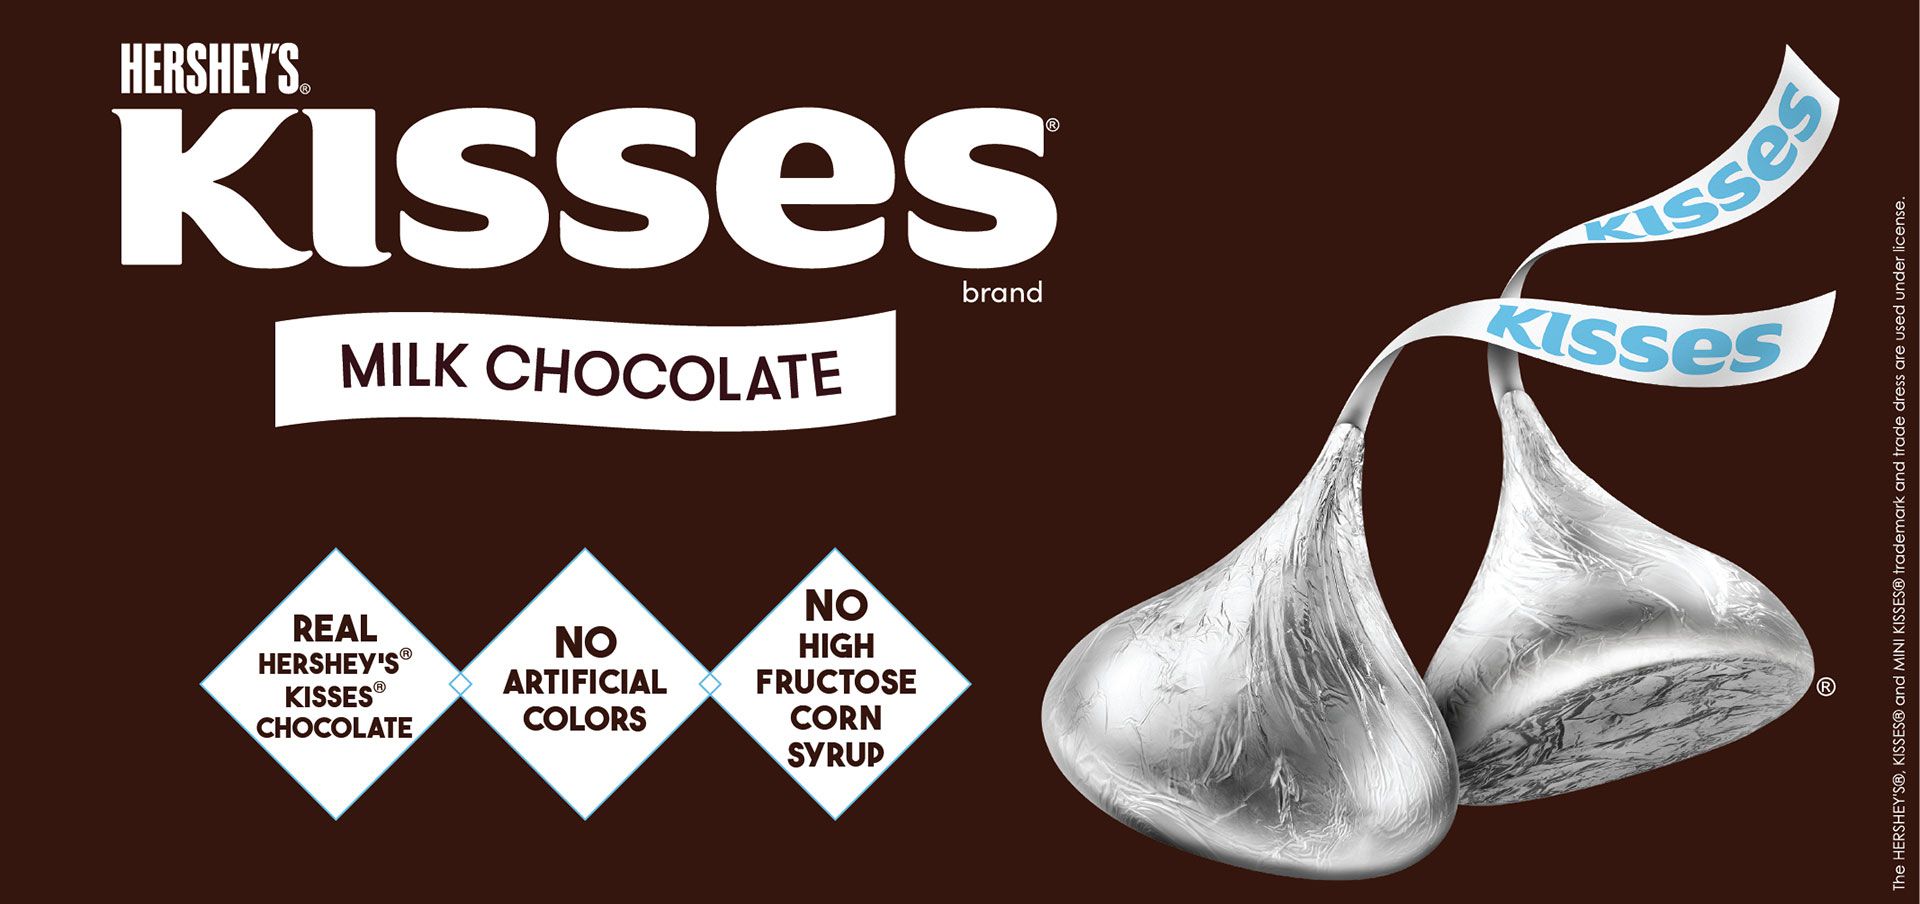 hershey's® kisses® milk chocolate label image